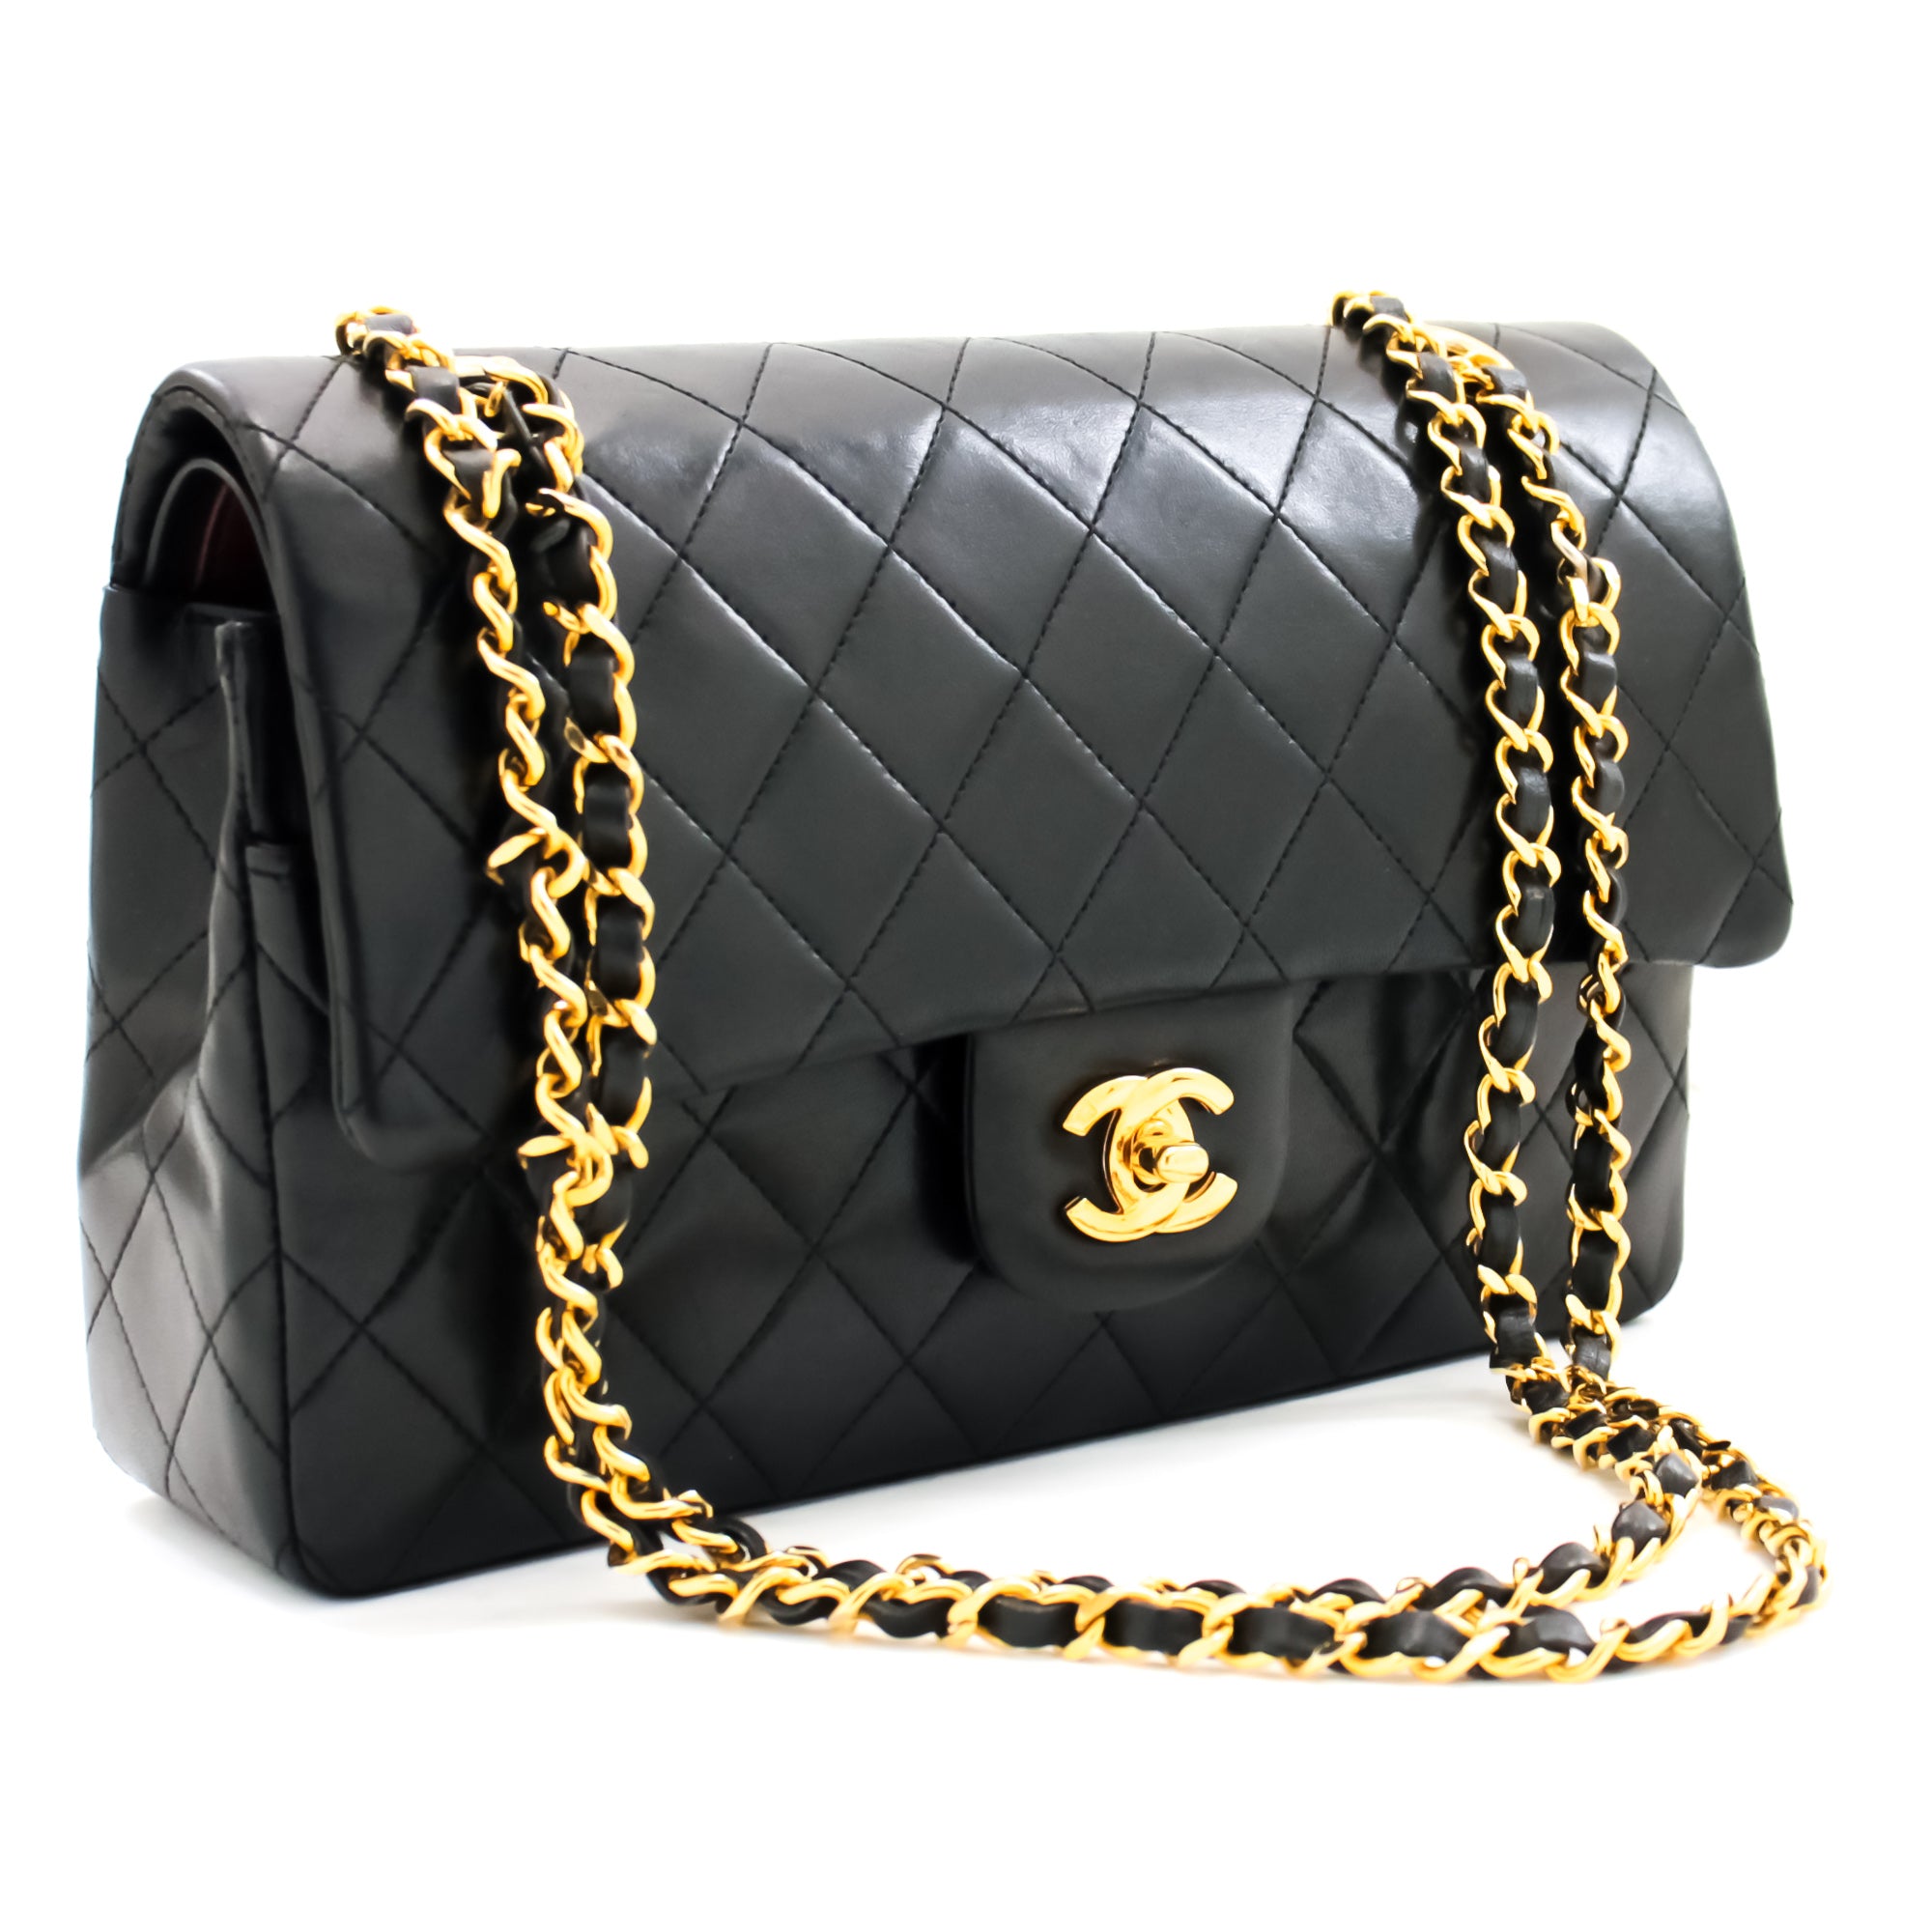 Chanel 2015 Chevron V-Stitch Leather Chain Flap Shoulder Bag i80